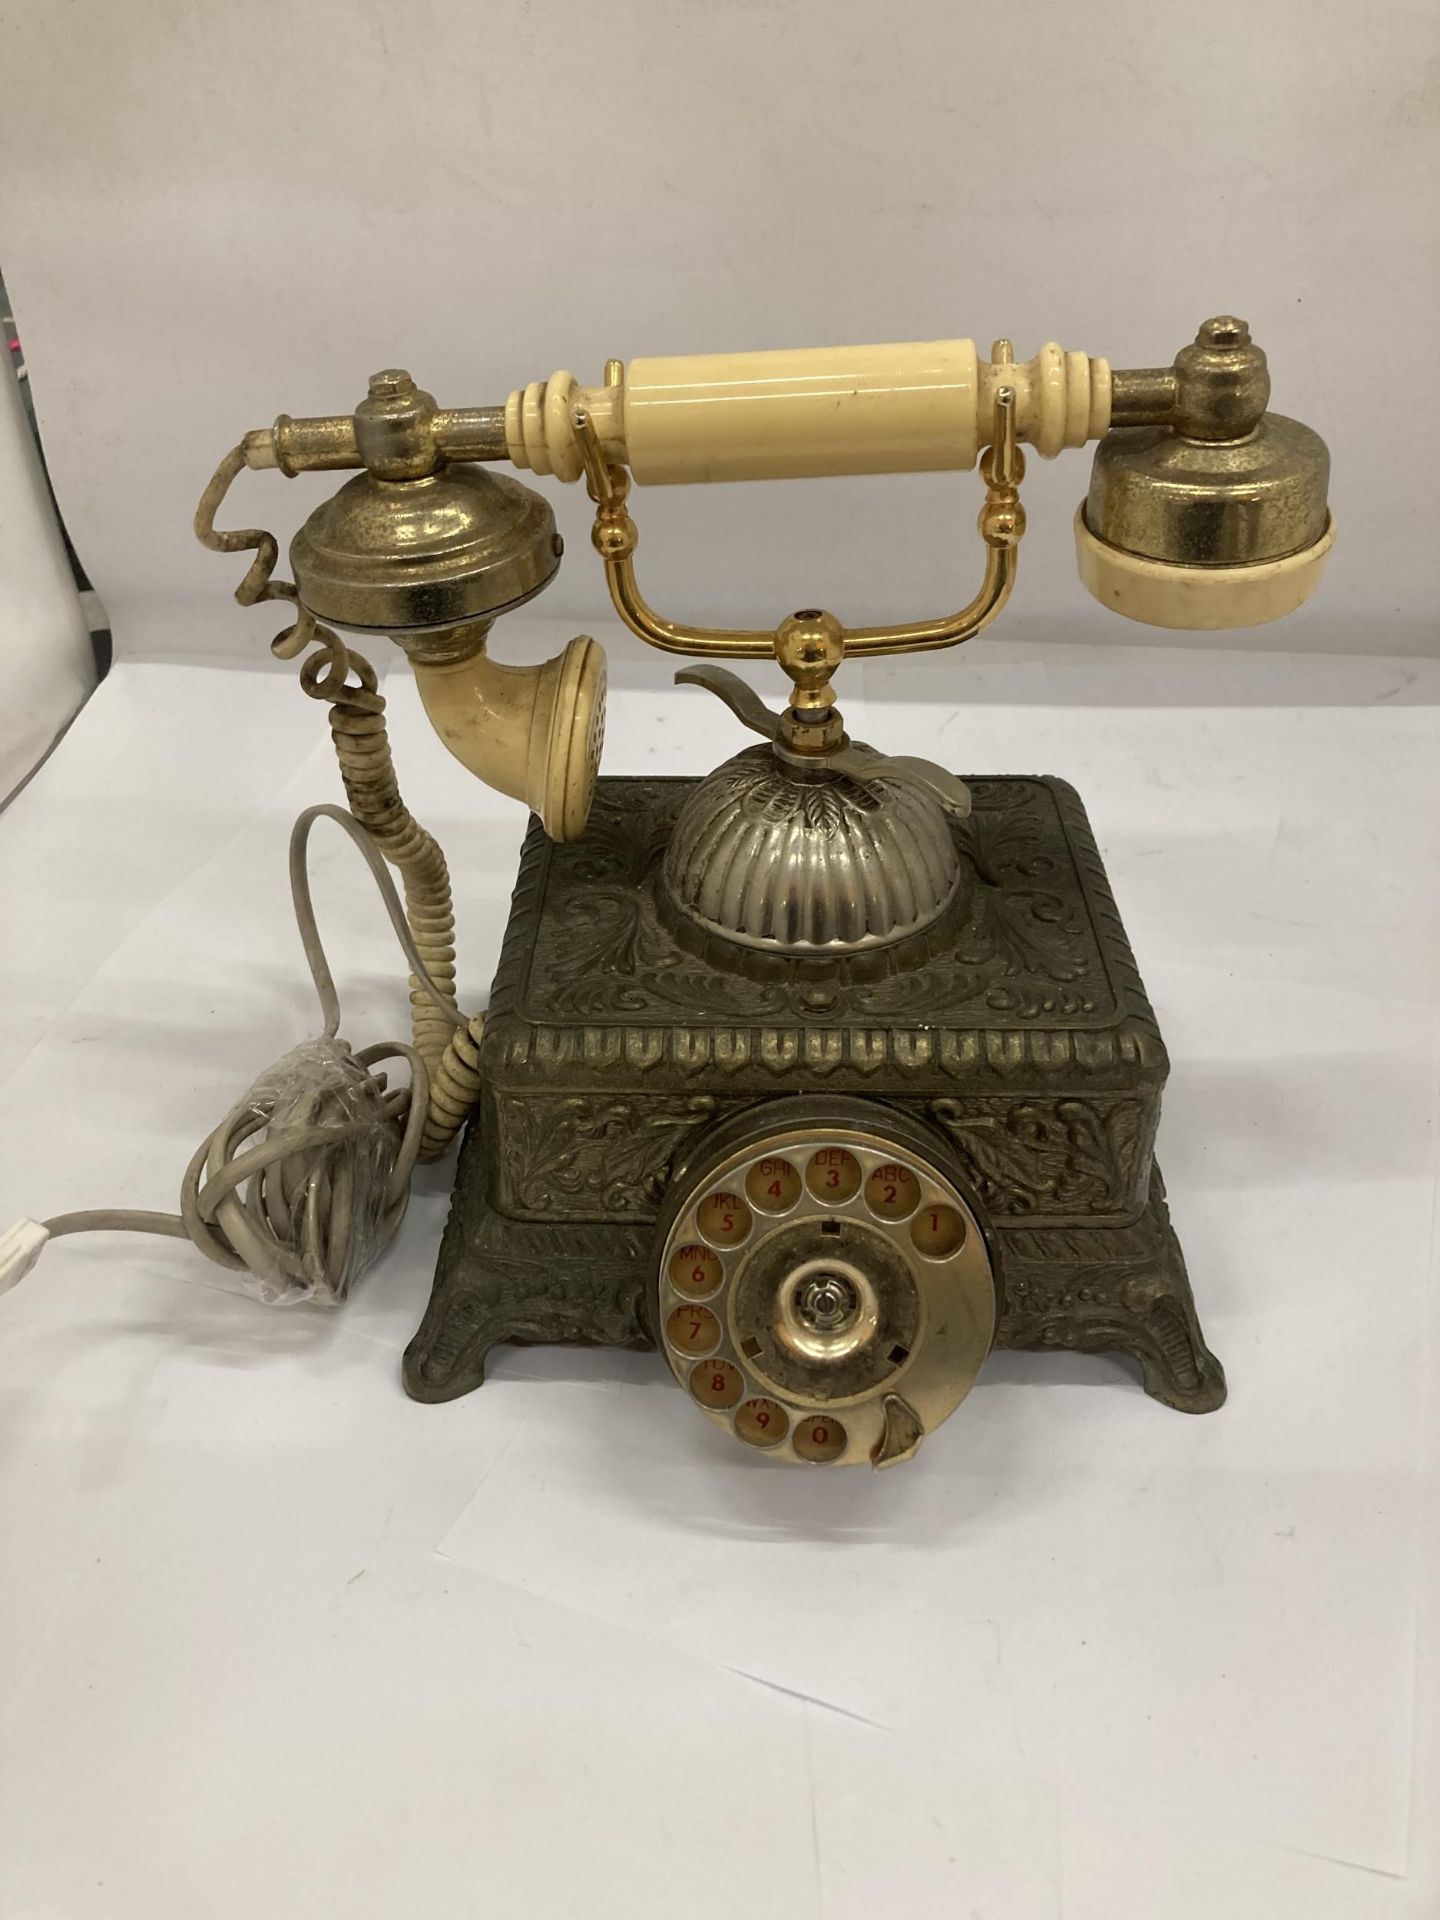 A HEAVY VINTAGE BRASS ORNATE TELEPHONE